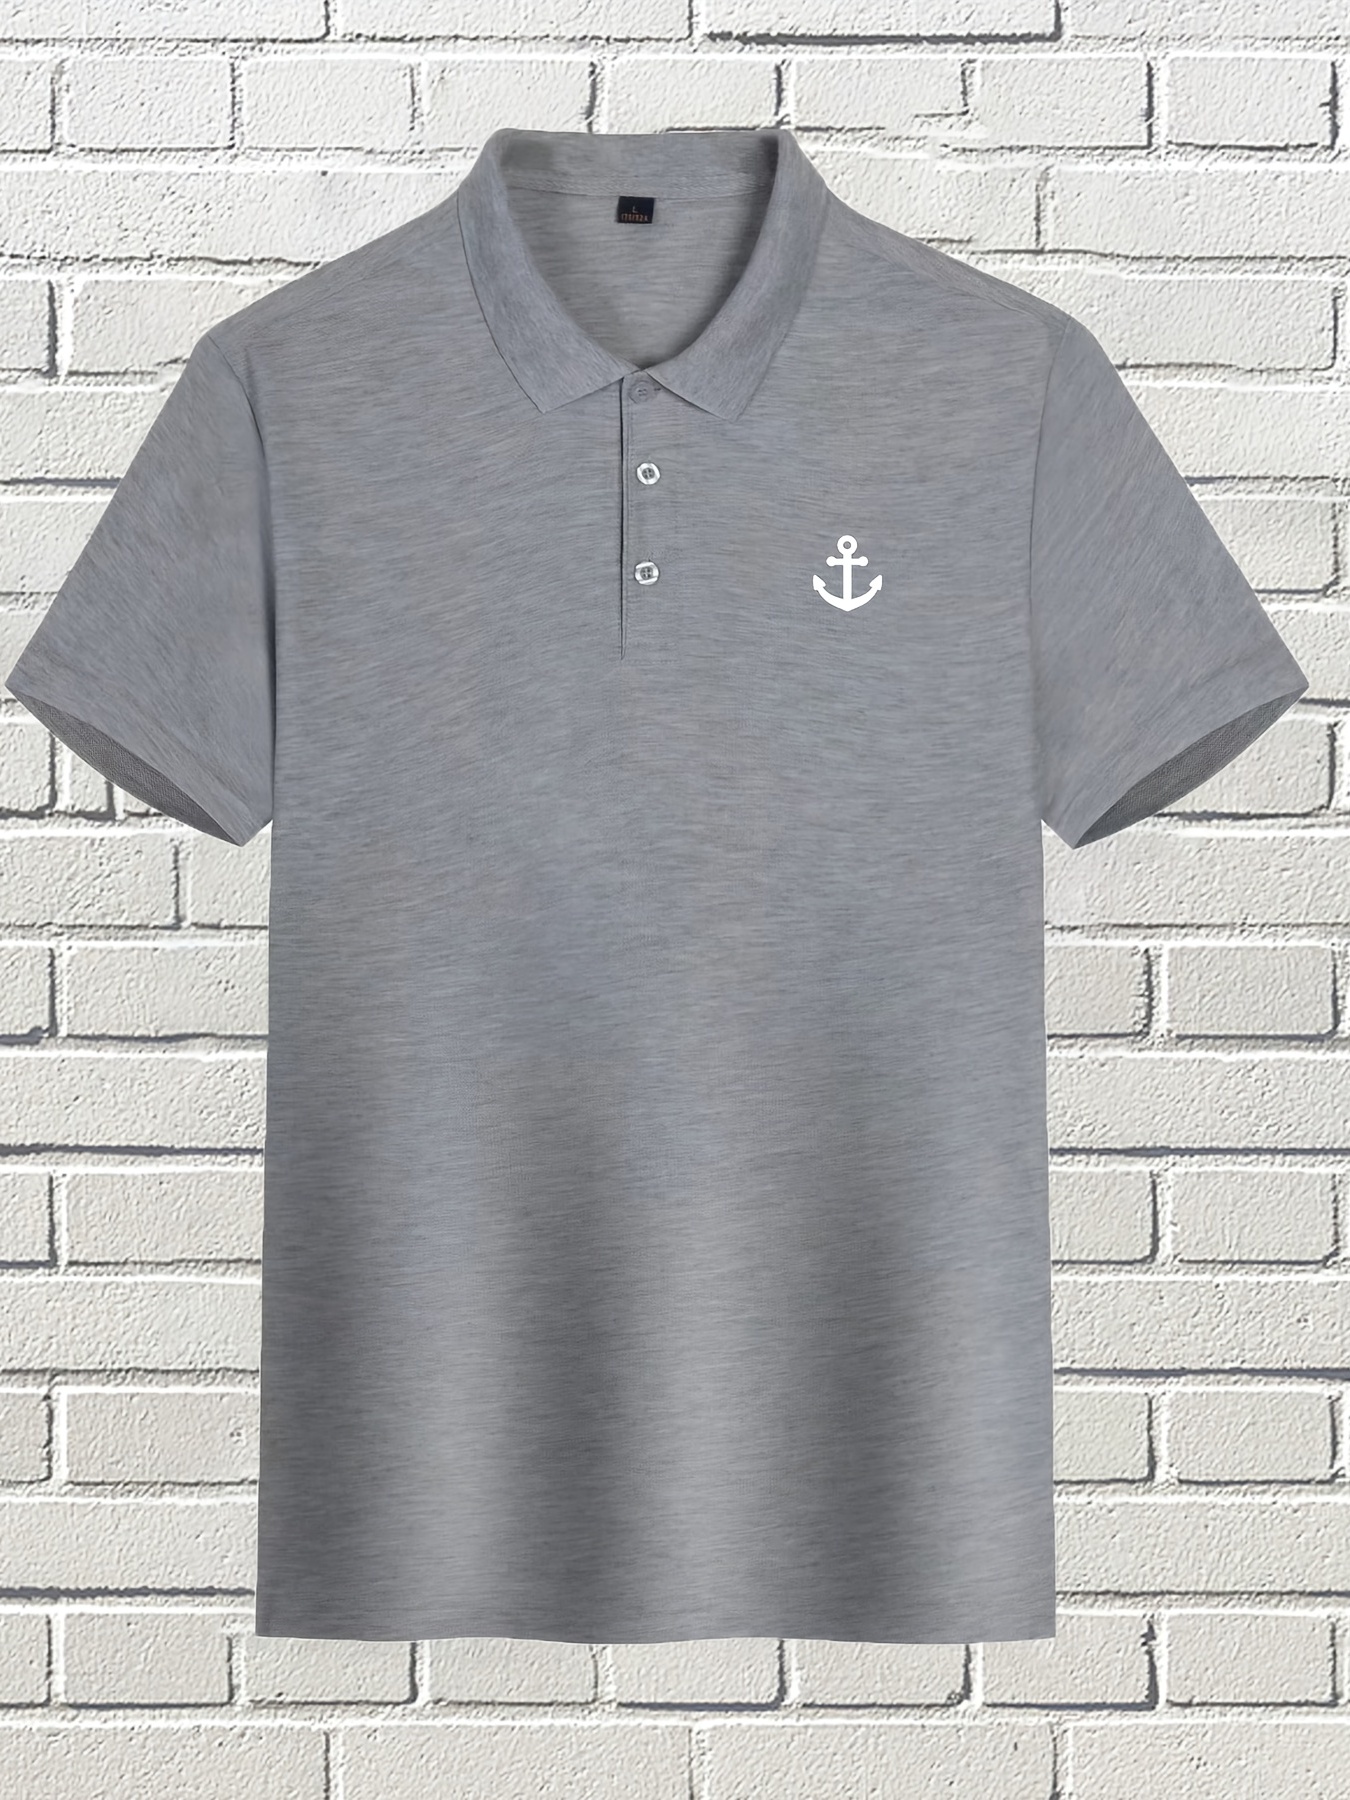 New Summer Polo Shirt Men's Print Short Sleeve Polo Tshirt High